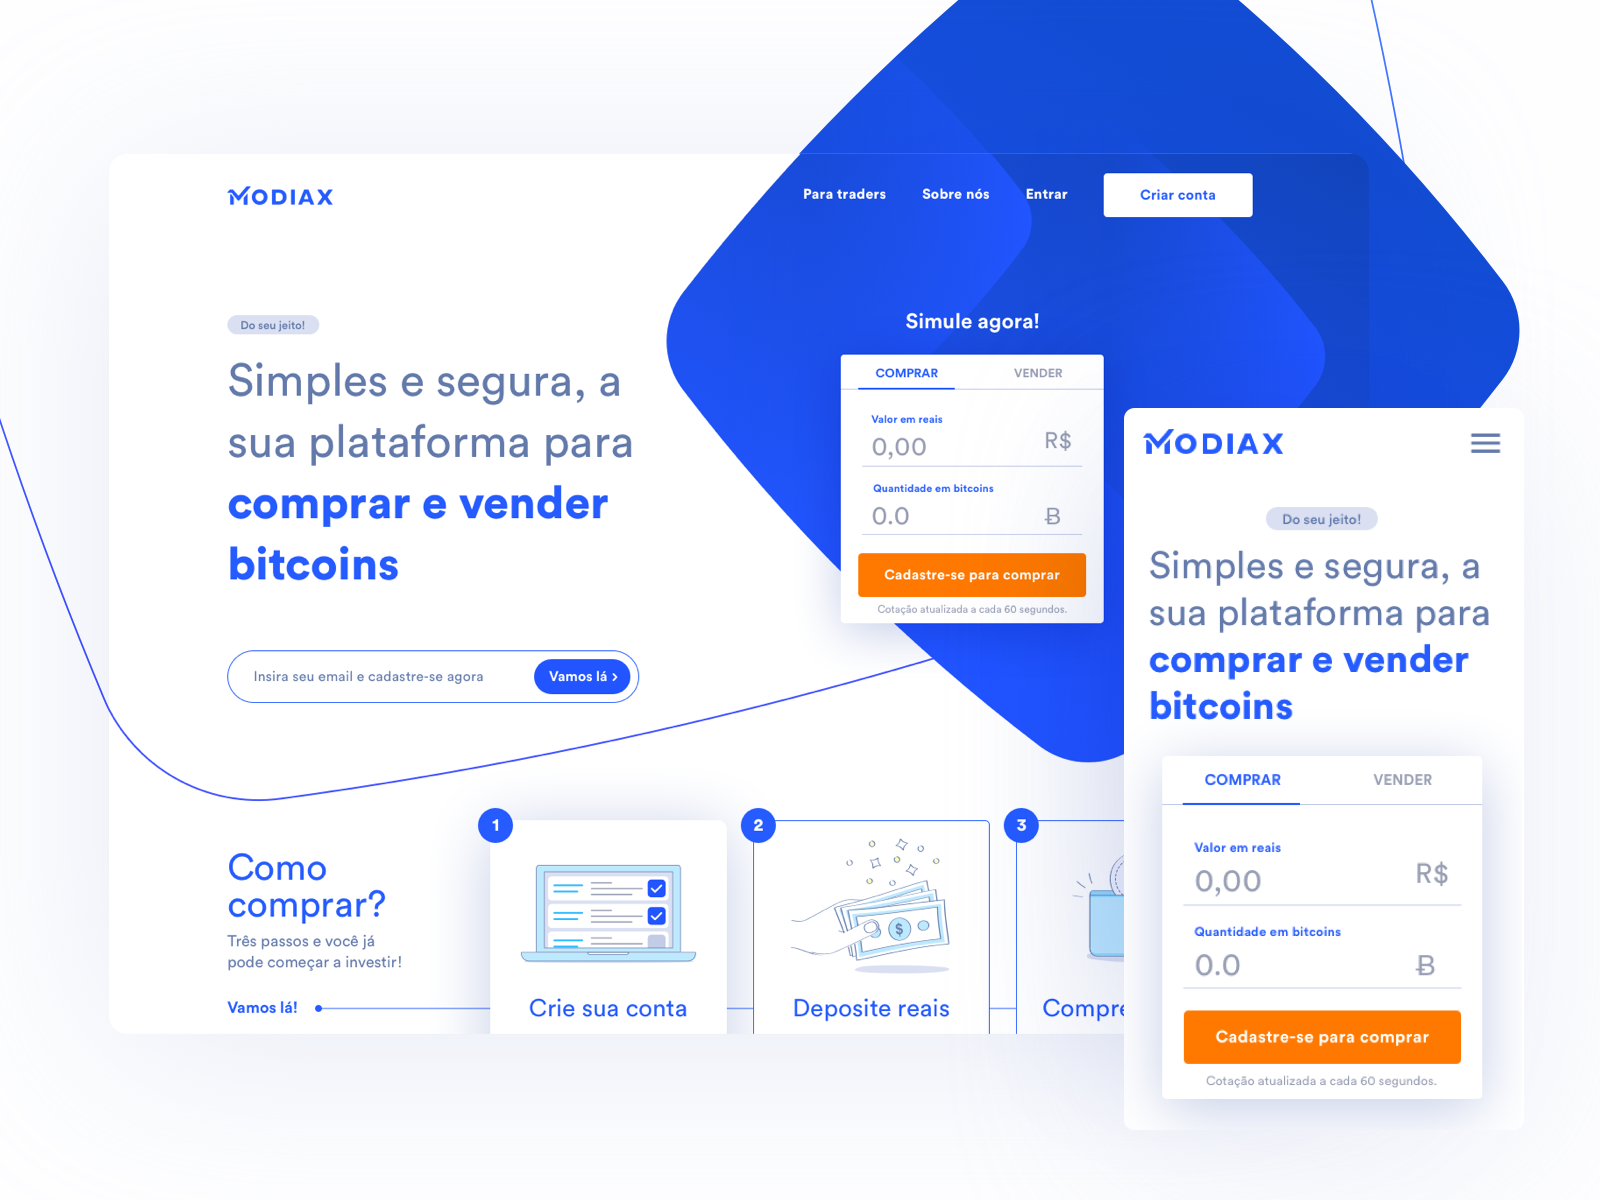 Modiax Crypto exchange – Website by F�bio Oliveira on Dribbble